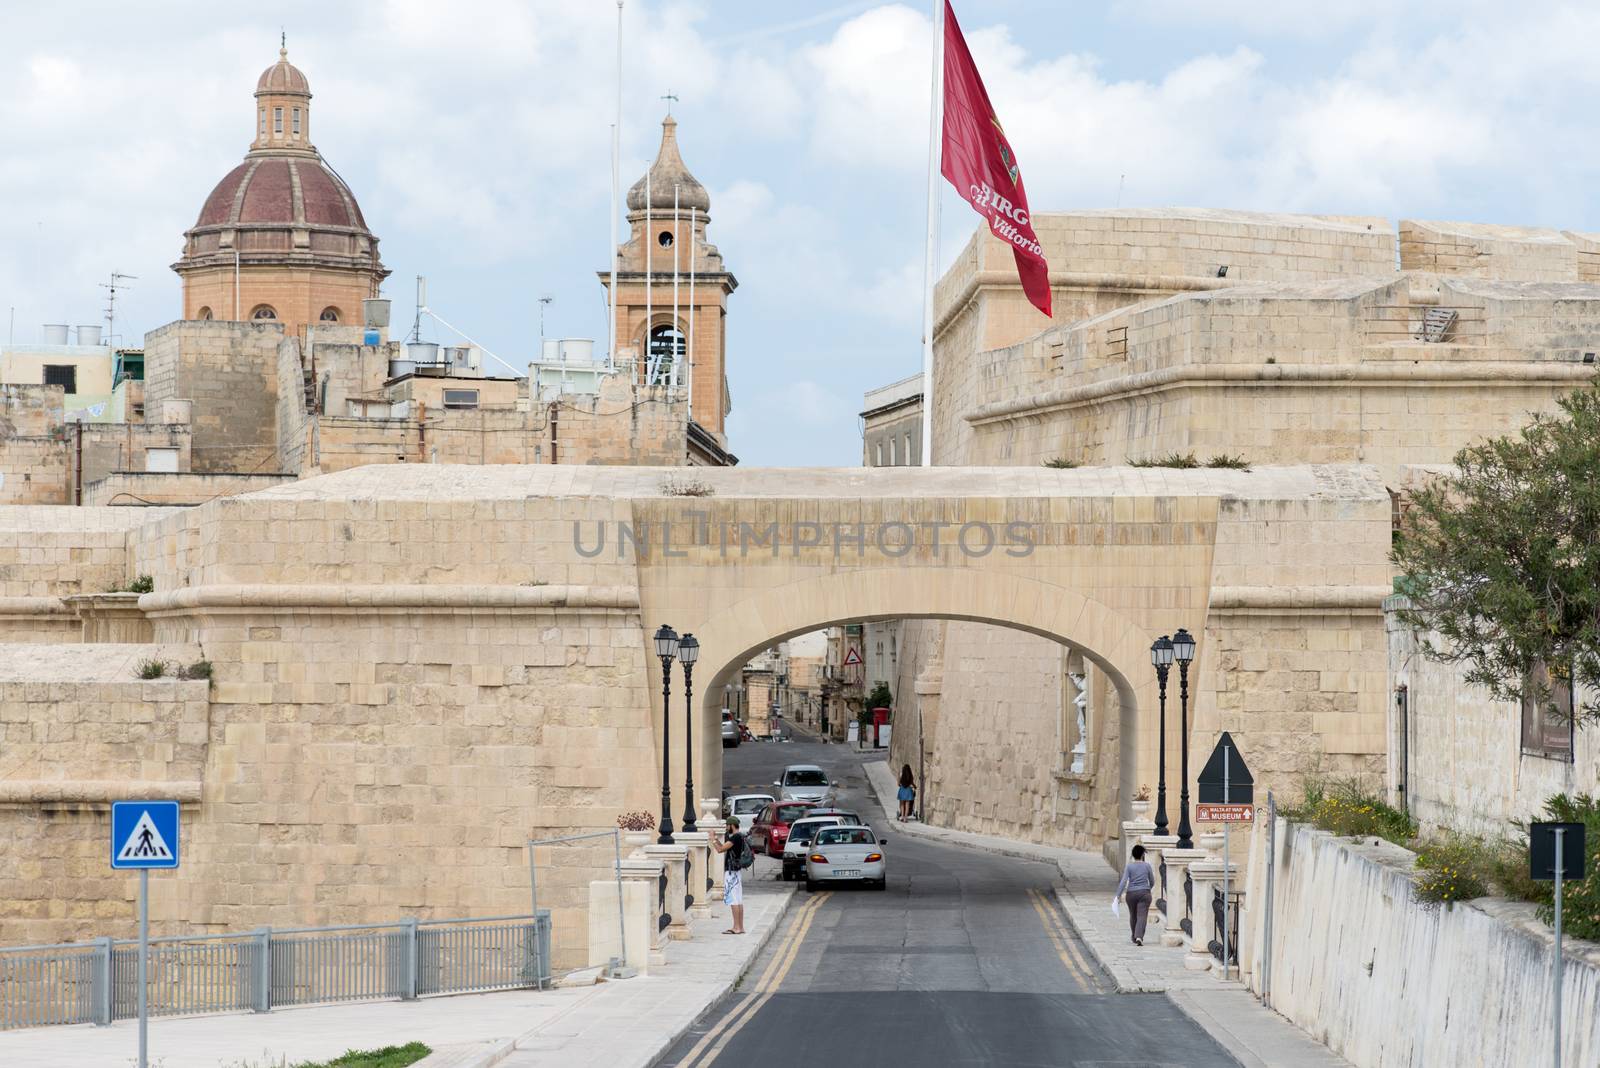 Valletta, Malta - April 12: People and tourists at the streets of Valleta, Malta on April 12, 2014